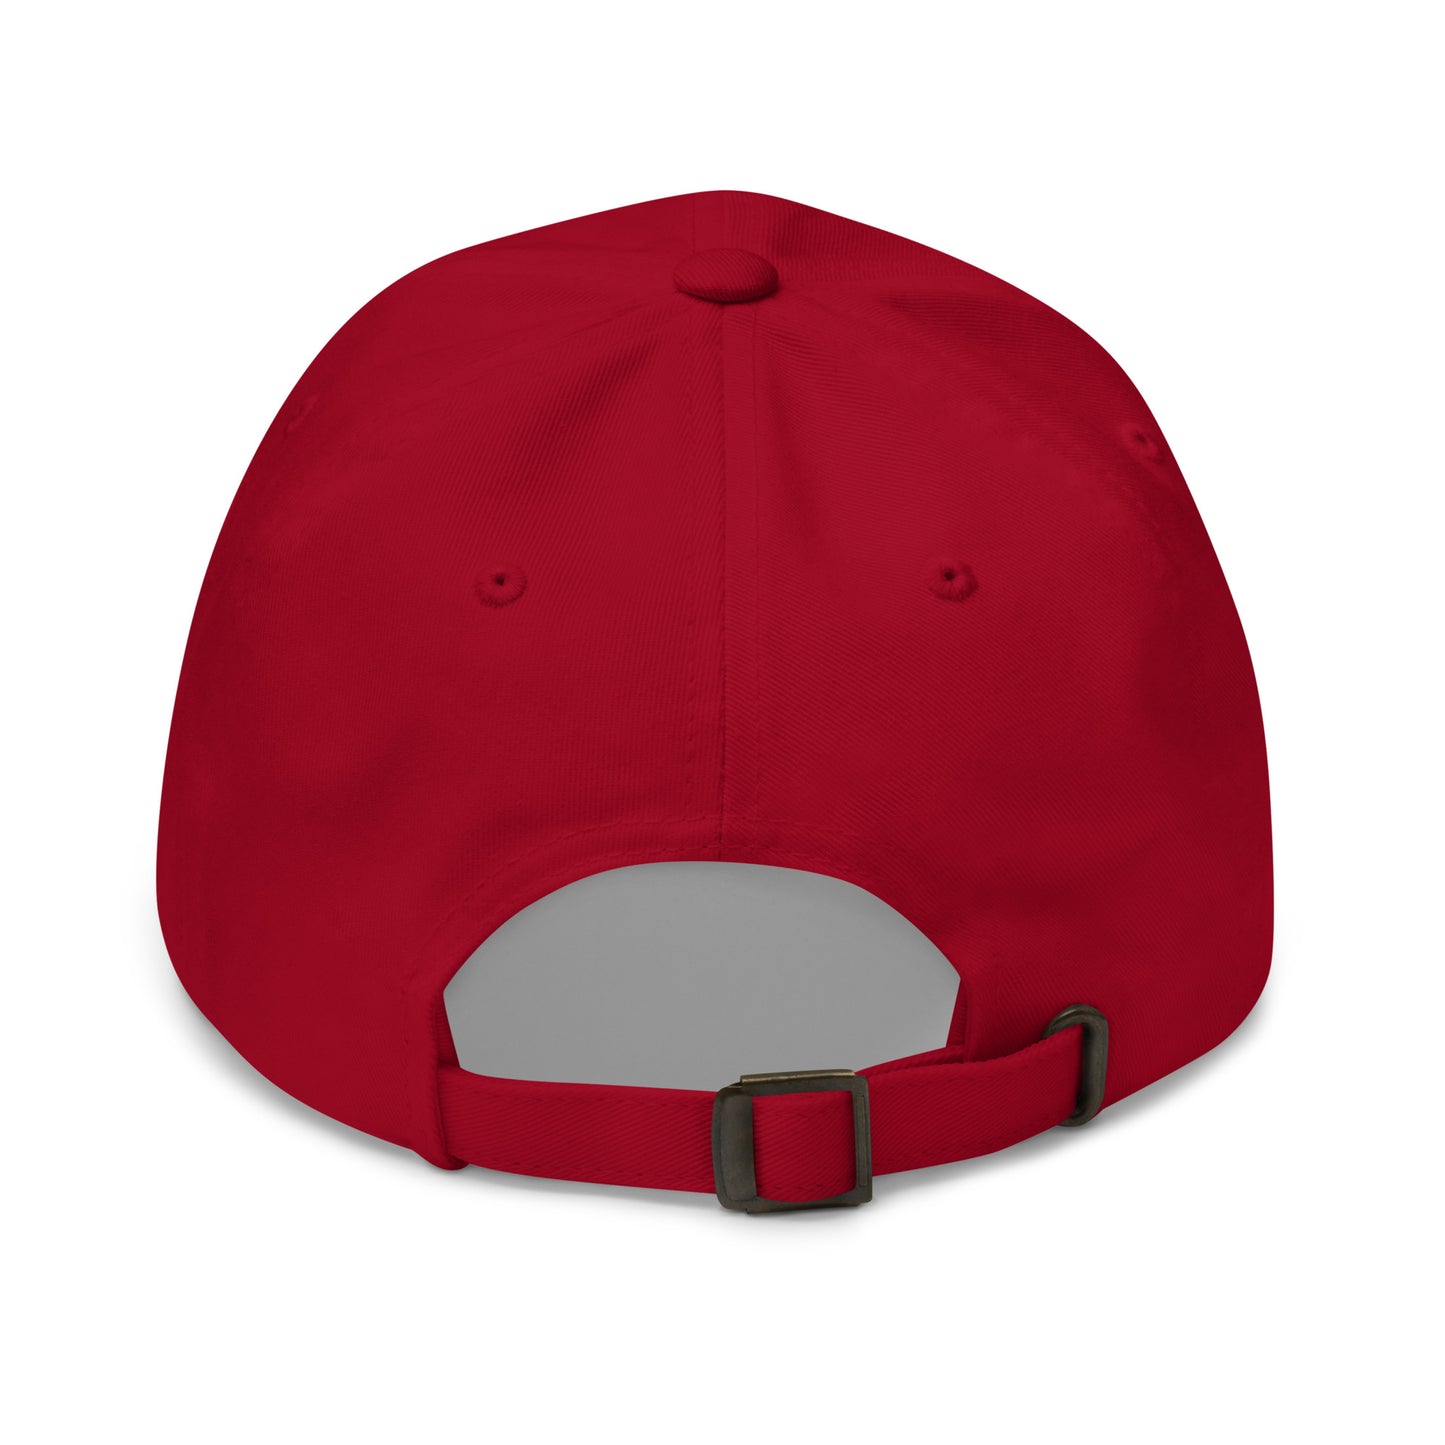 Bundamania Red Hat